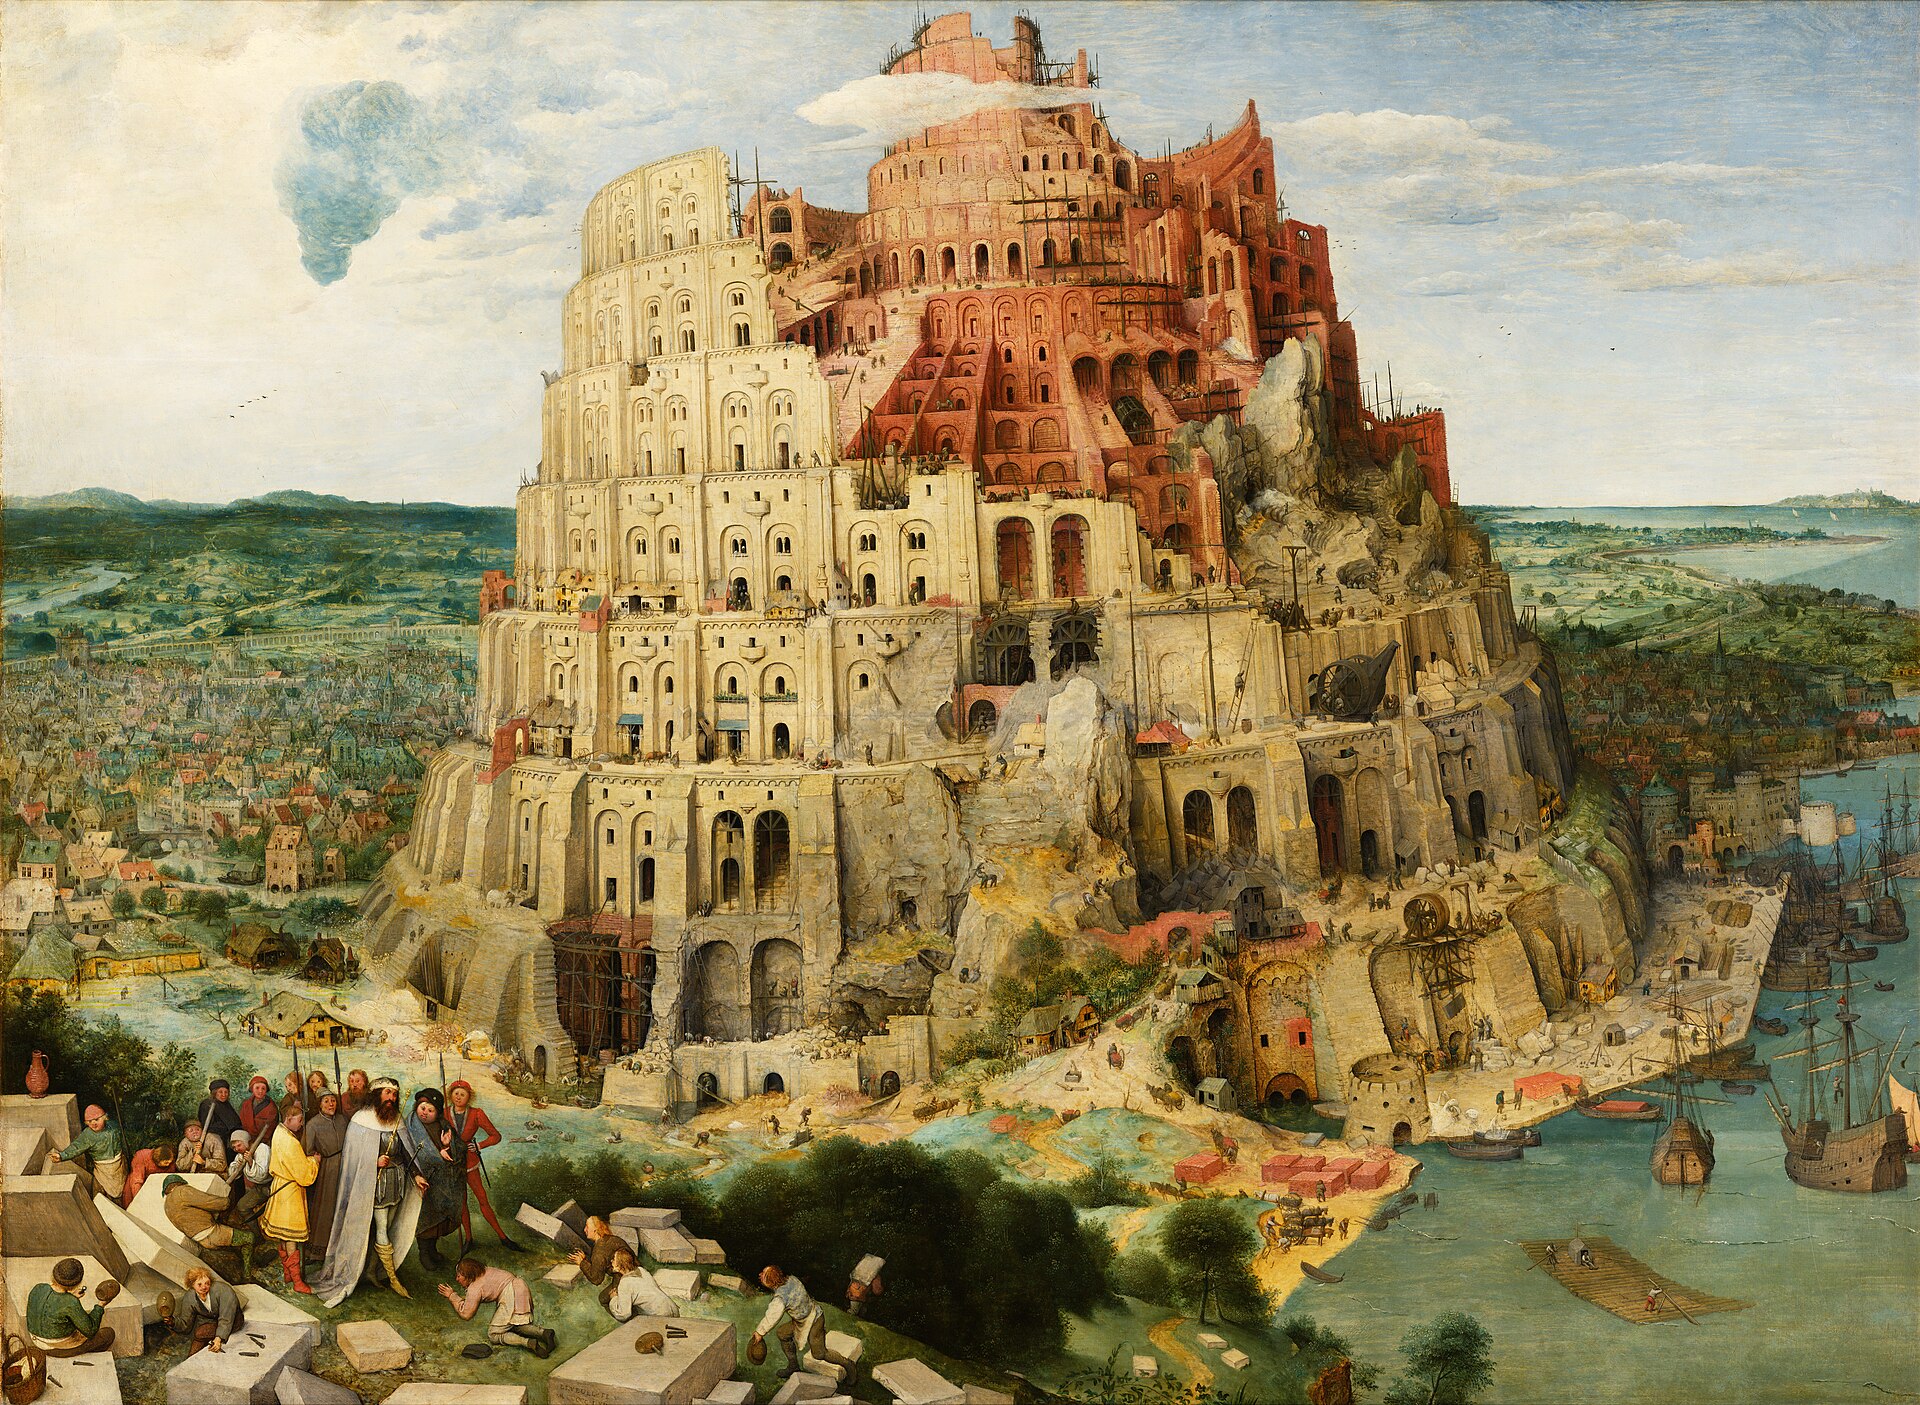 Babil Kulesi (orig. "Tower of Babel") by Pieter Bruegel (baba) - 1563 civarı - 114 × 155 cm Kunsthistorisches Museum